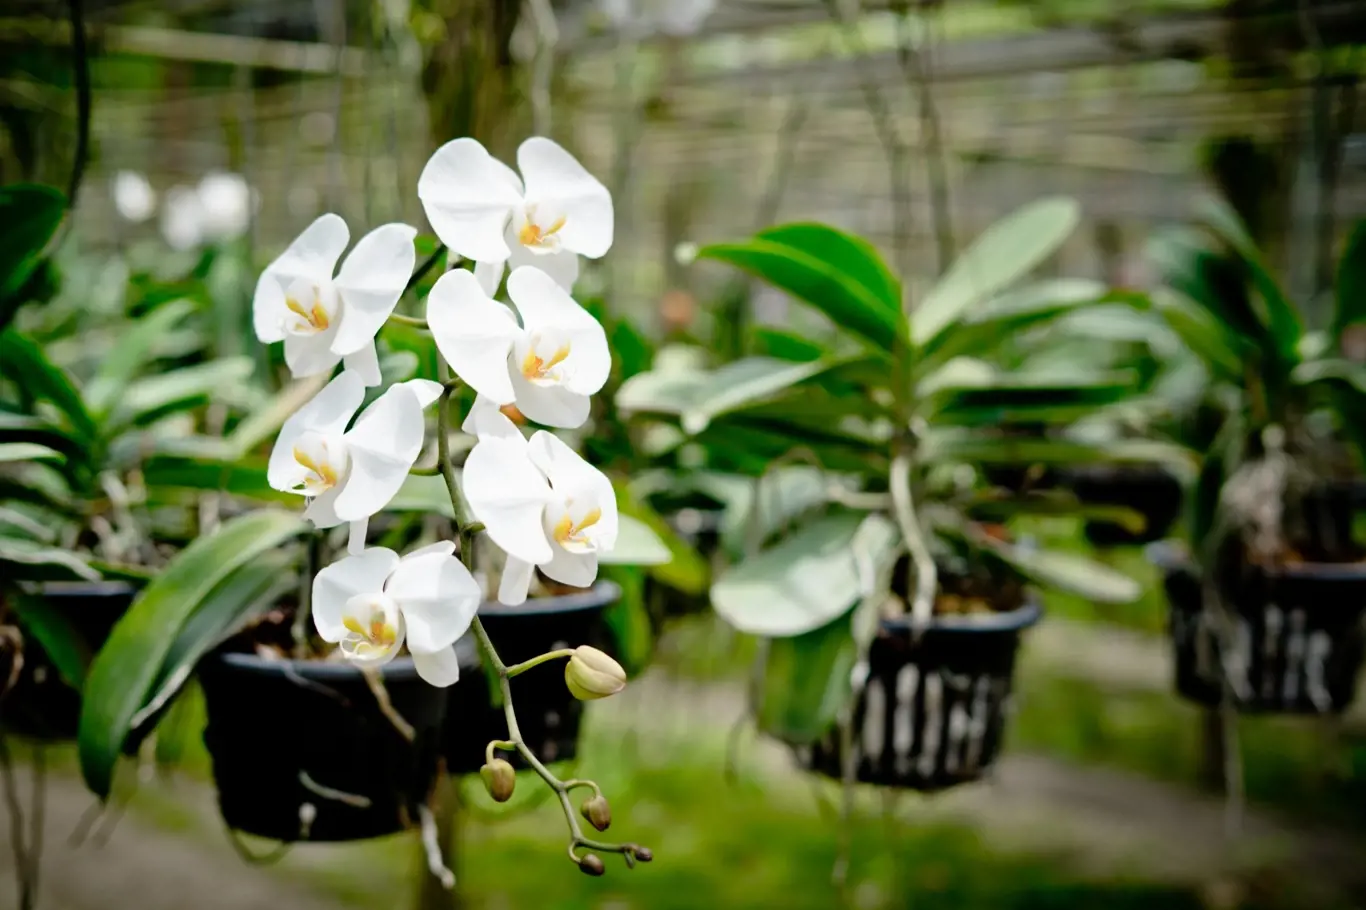 Orchidej (Phalaenopsis)